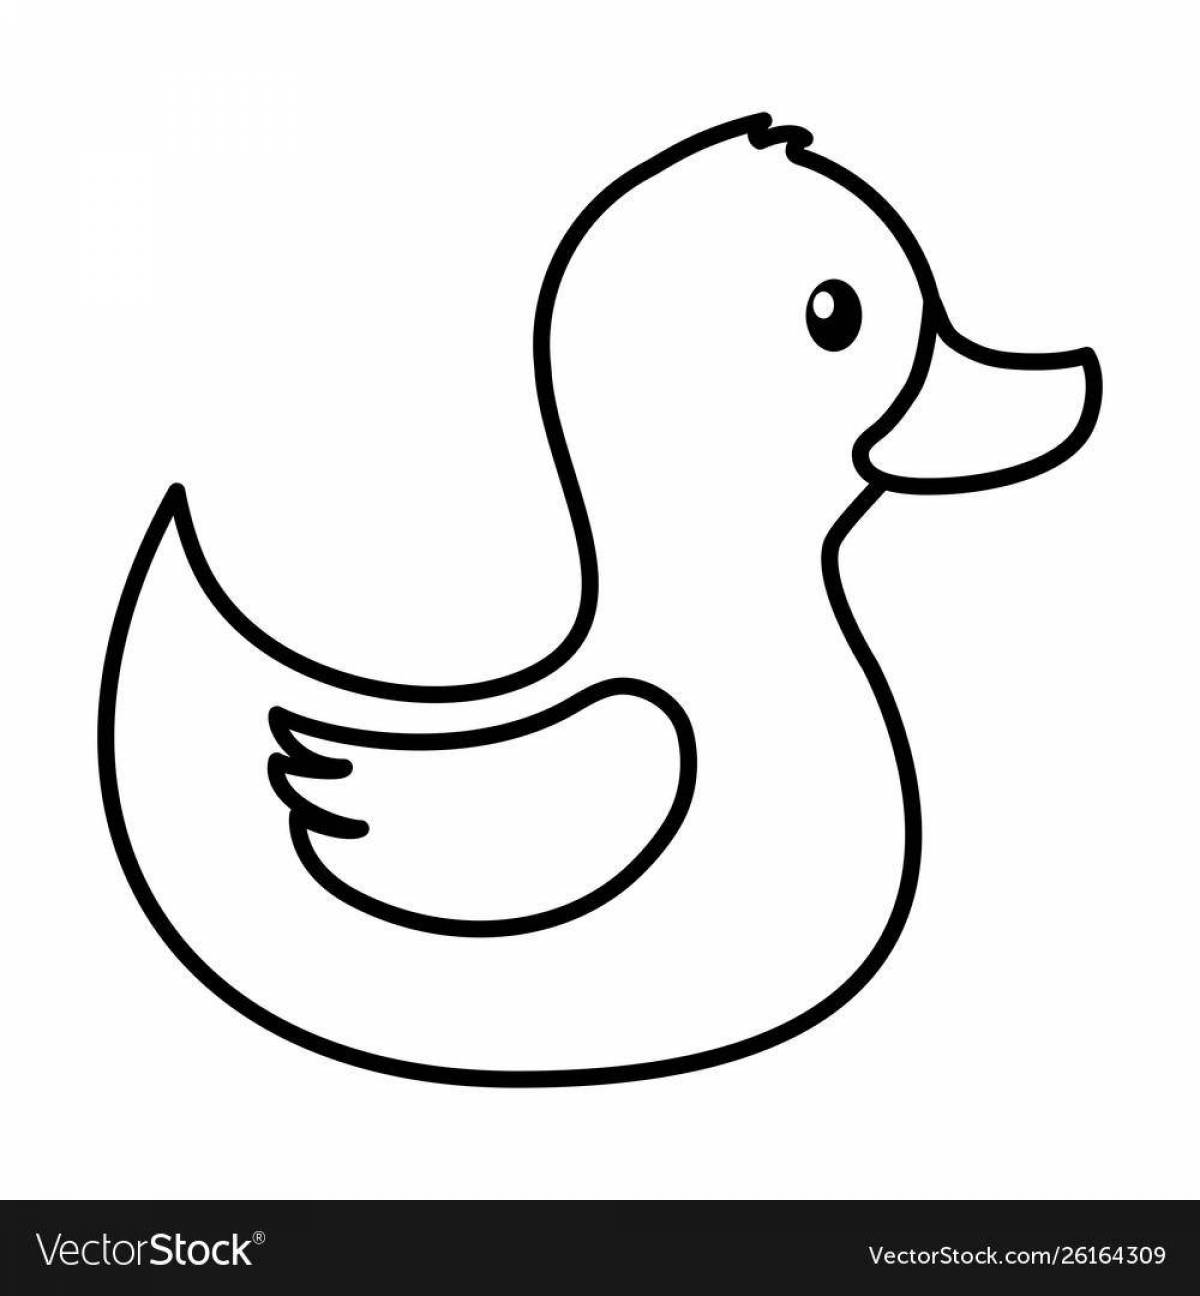 Coloring page joyful Dymkovo toy duck